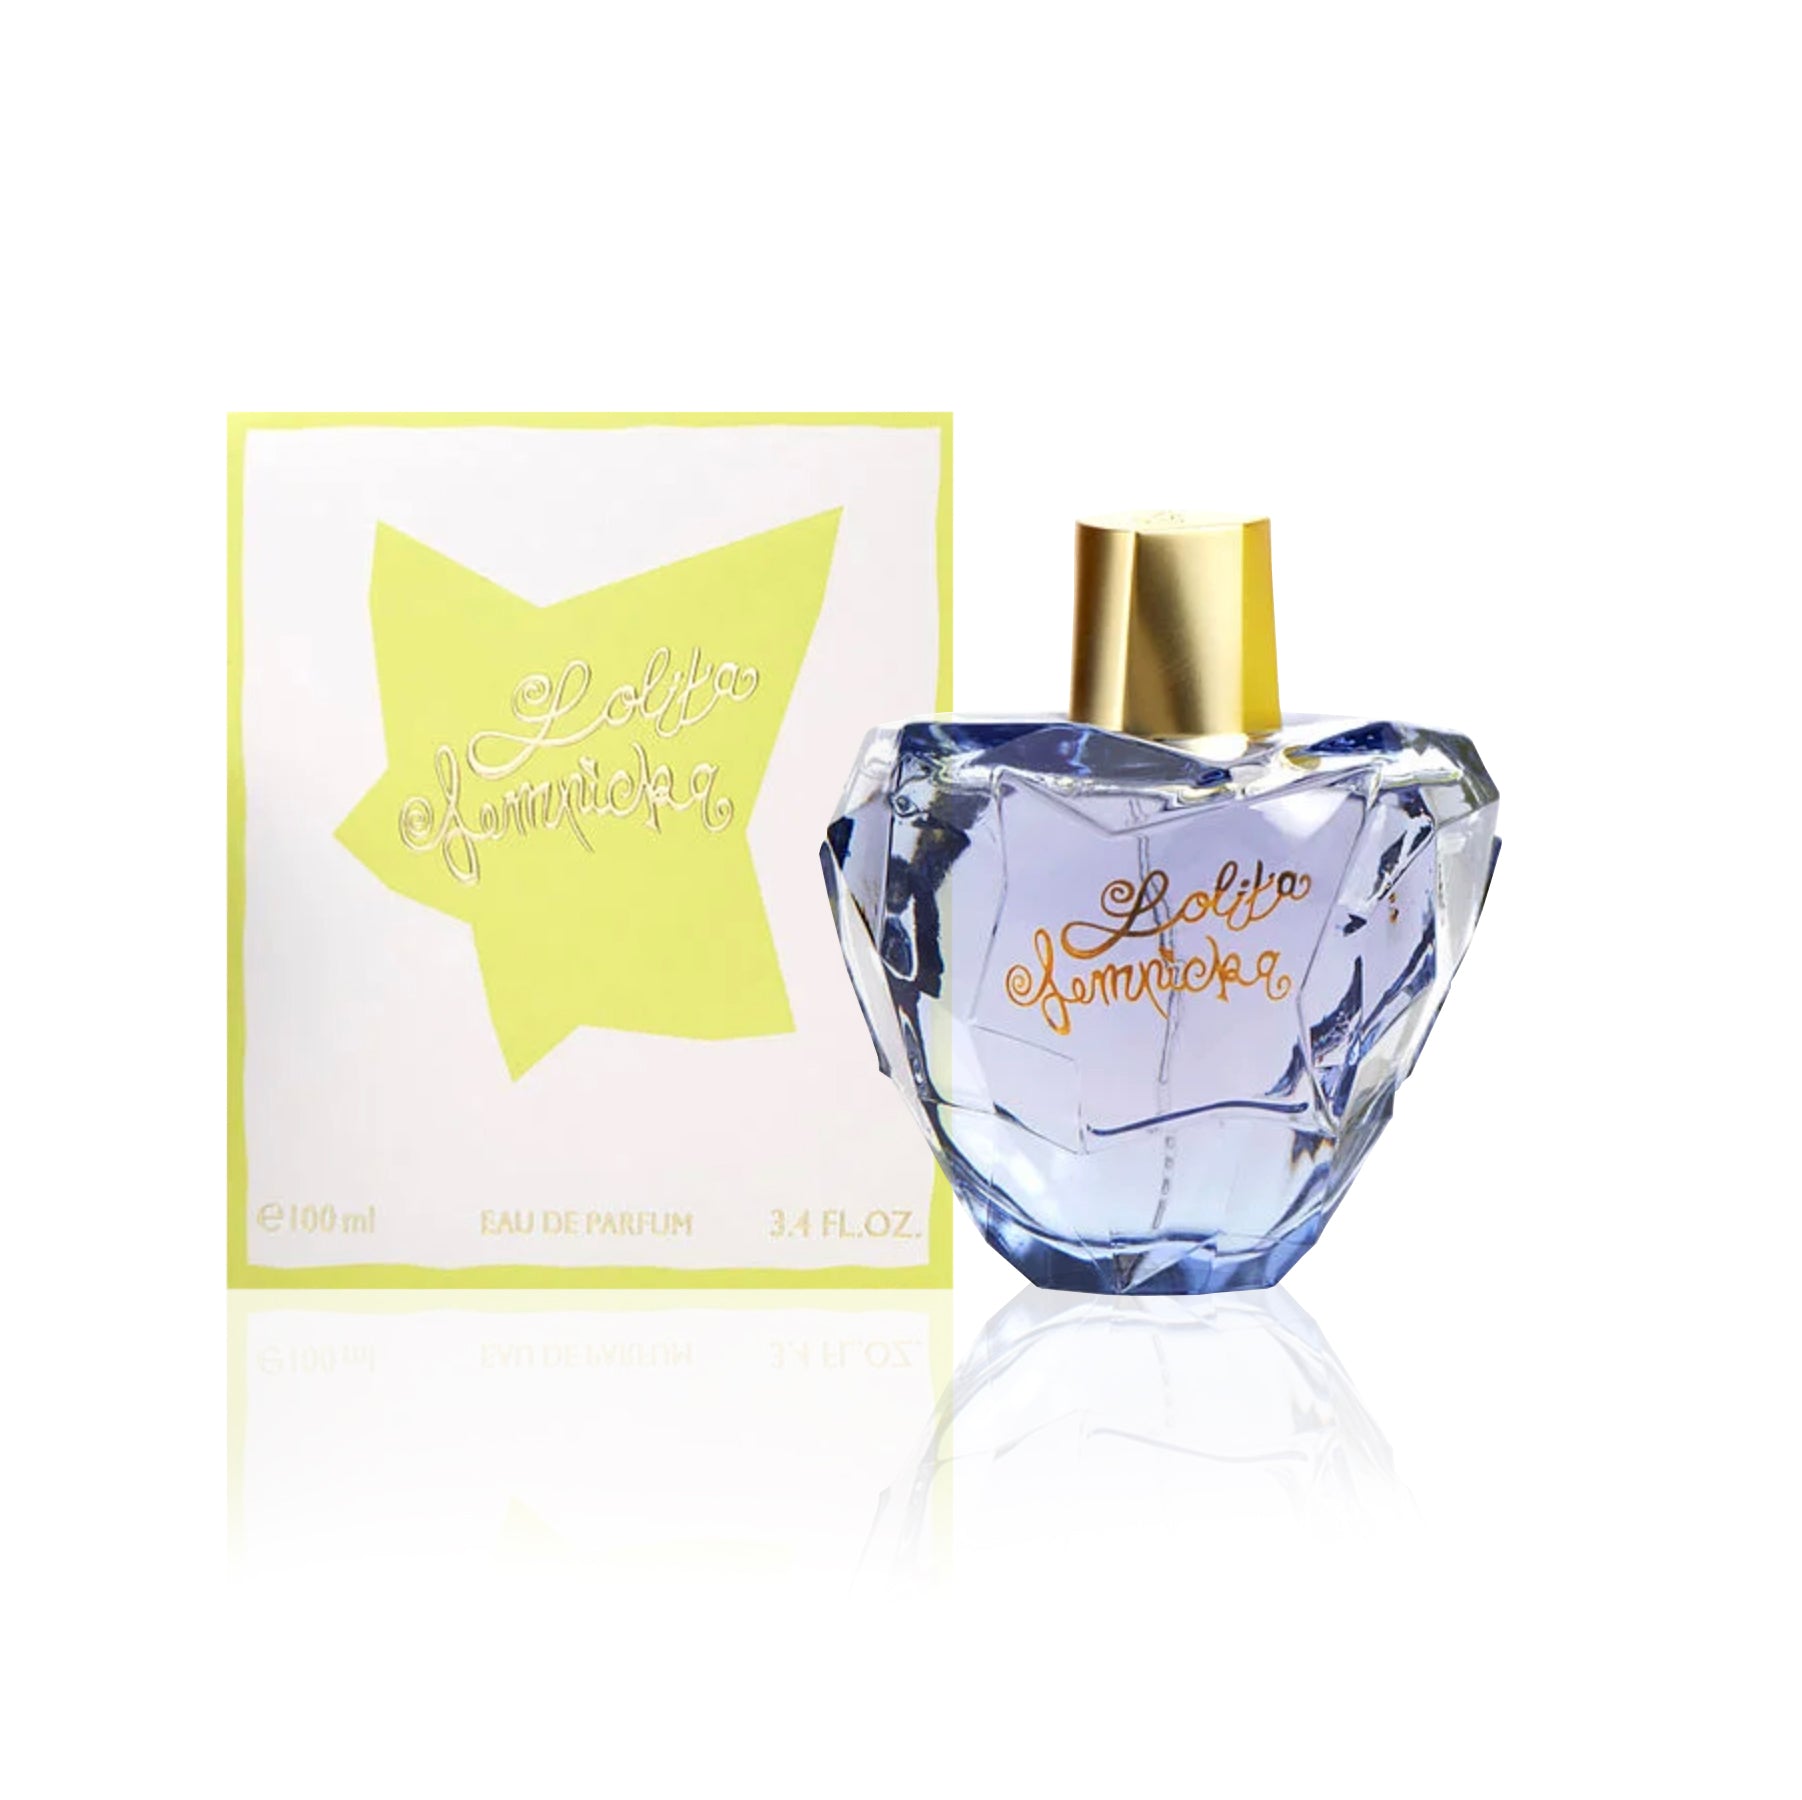 Lolita Lempicka Eau de Parfum Spray for Women by Lolita Lempicka Perfume, Product image 1